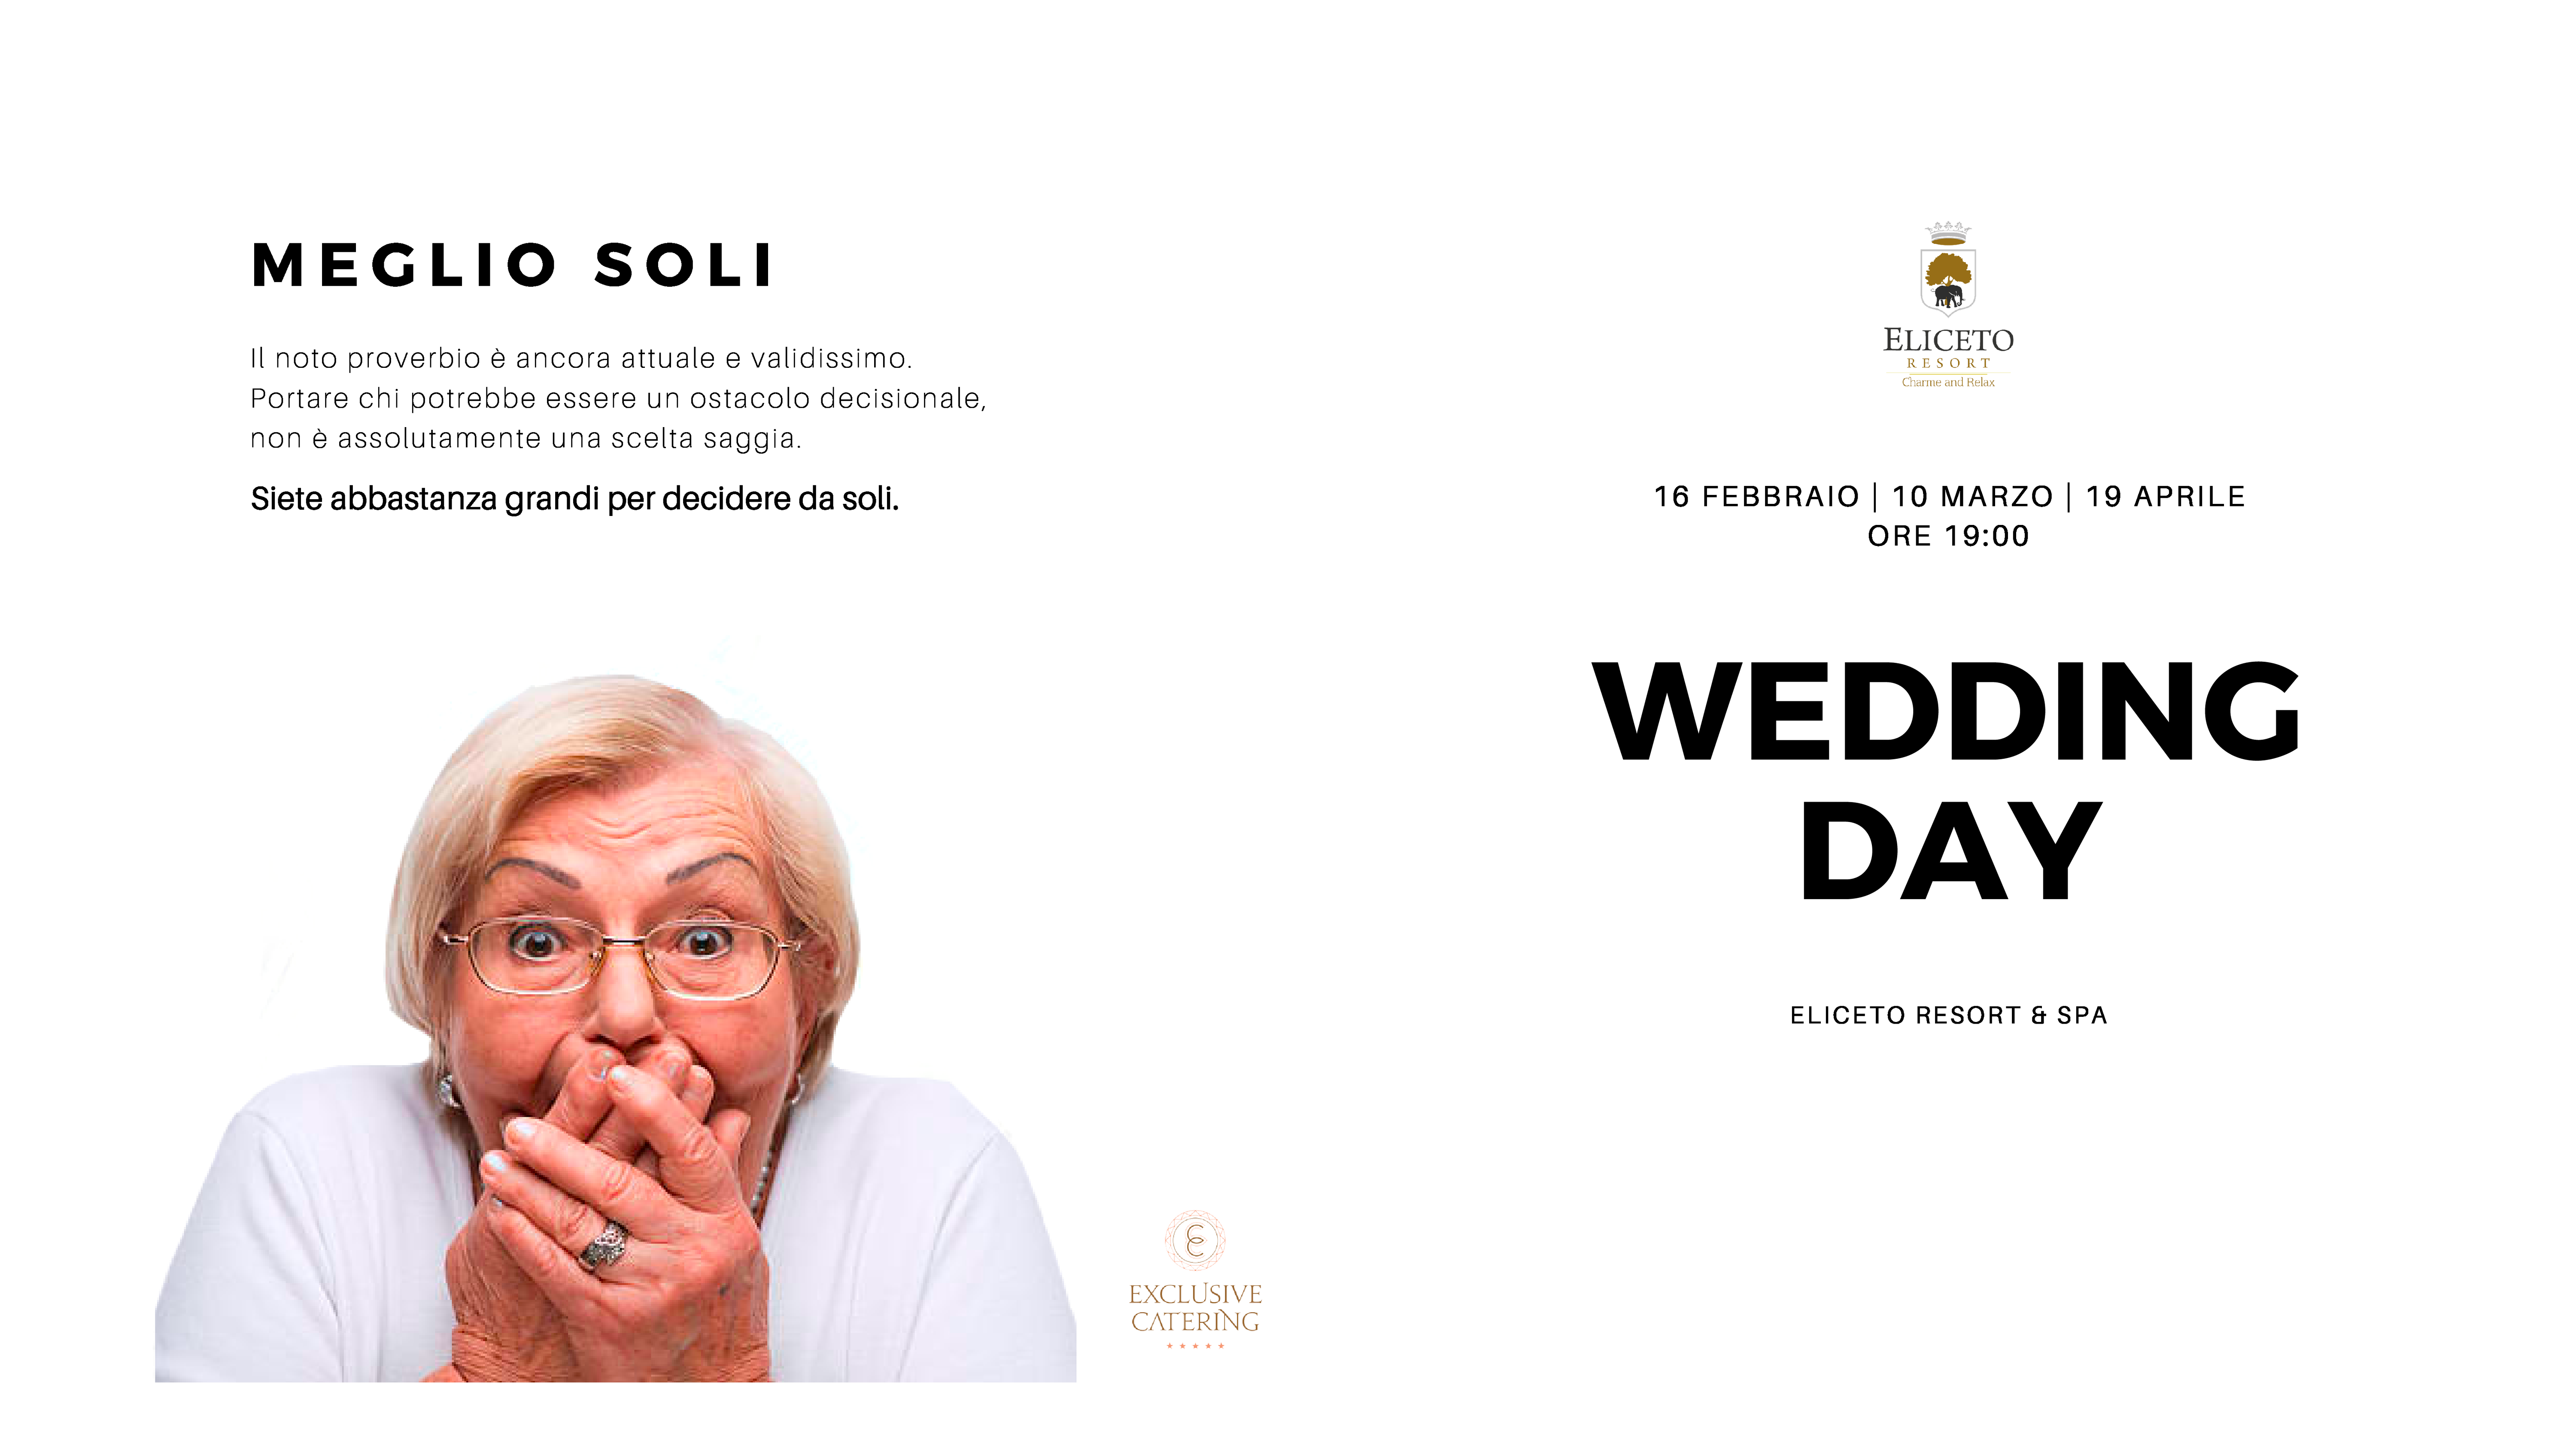 weddingday-2019-wedding-eliceto-resort-sposi2019